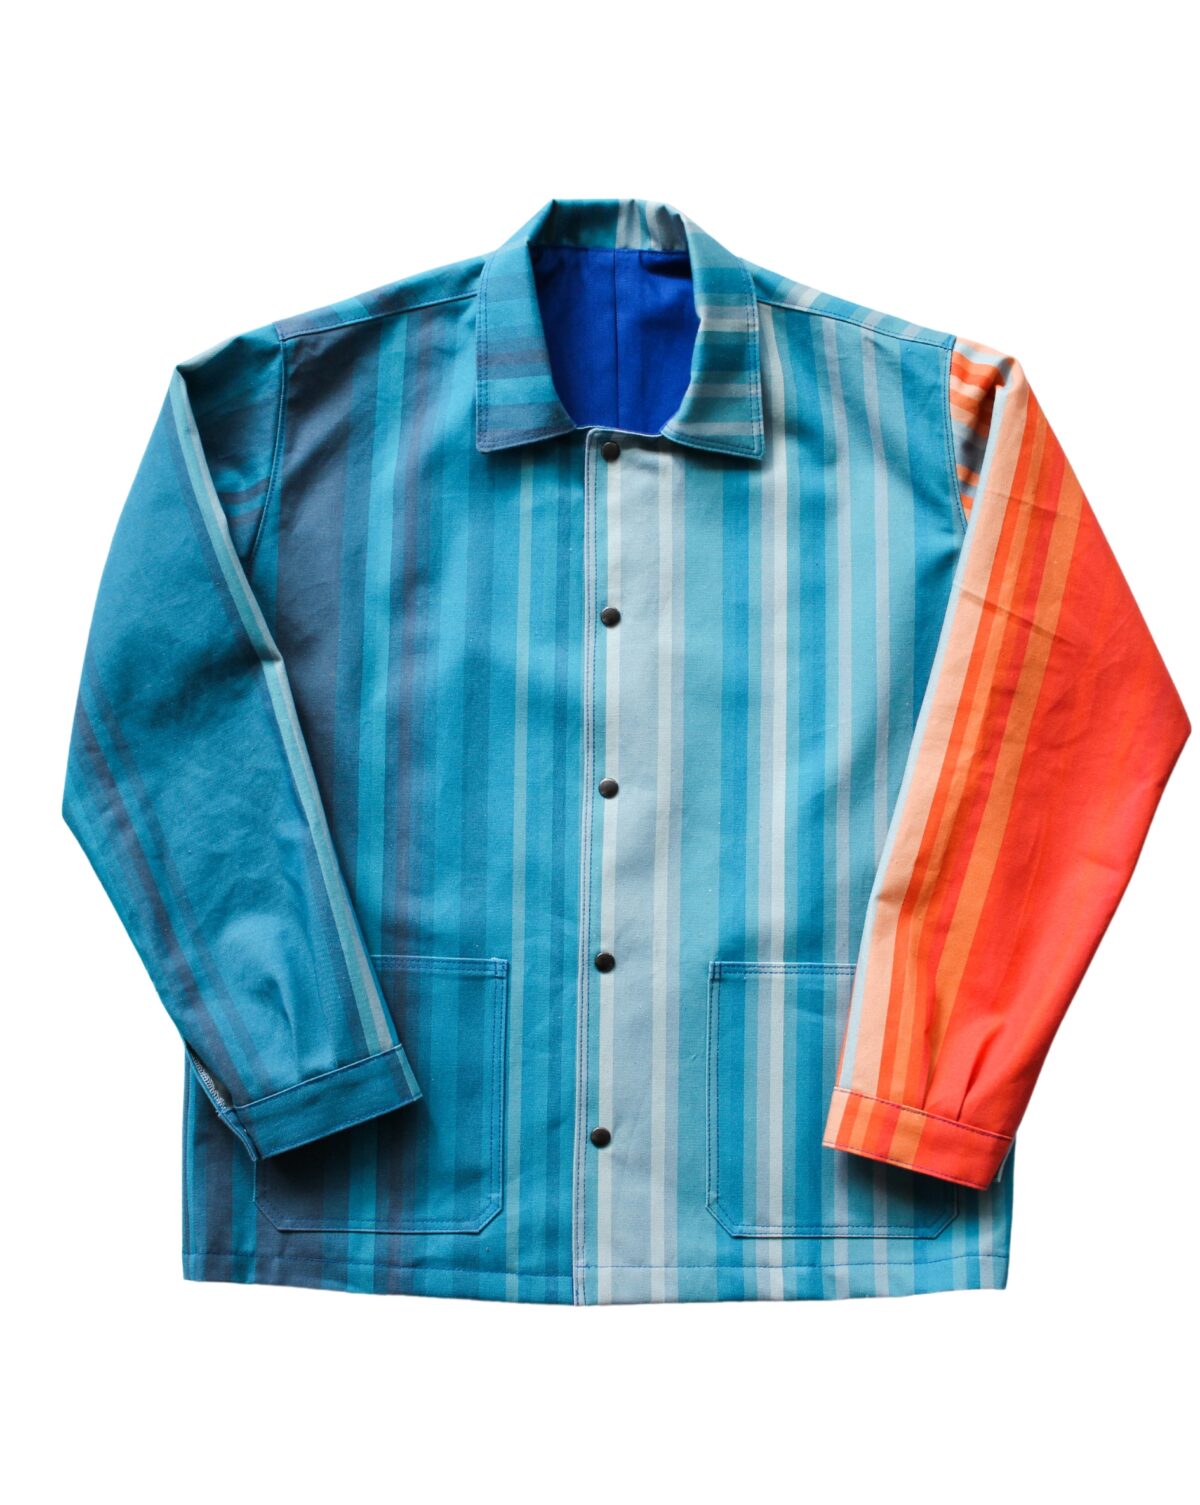 warming-stripes-jacket-modele